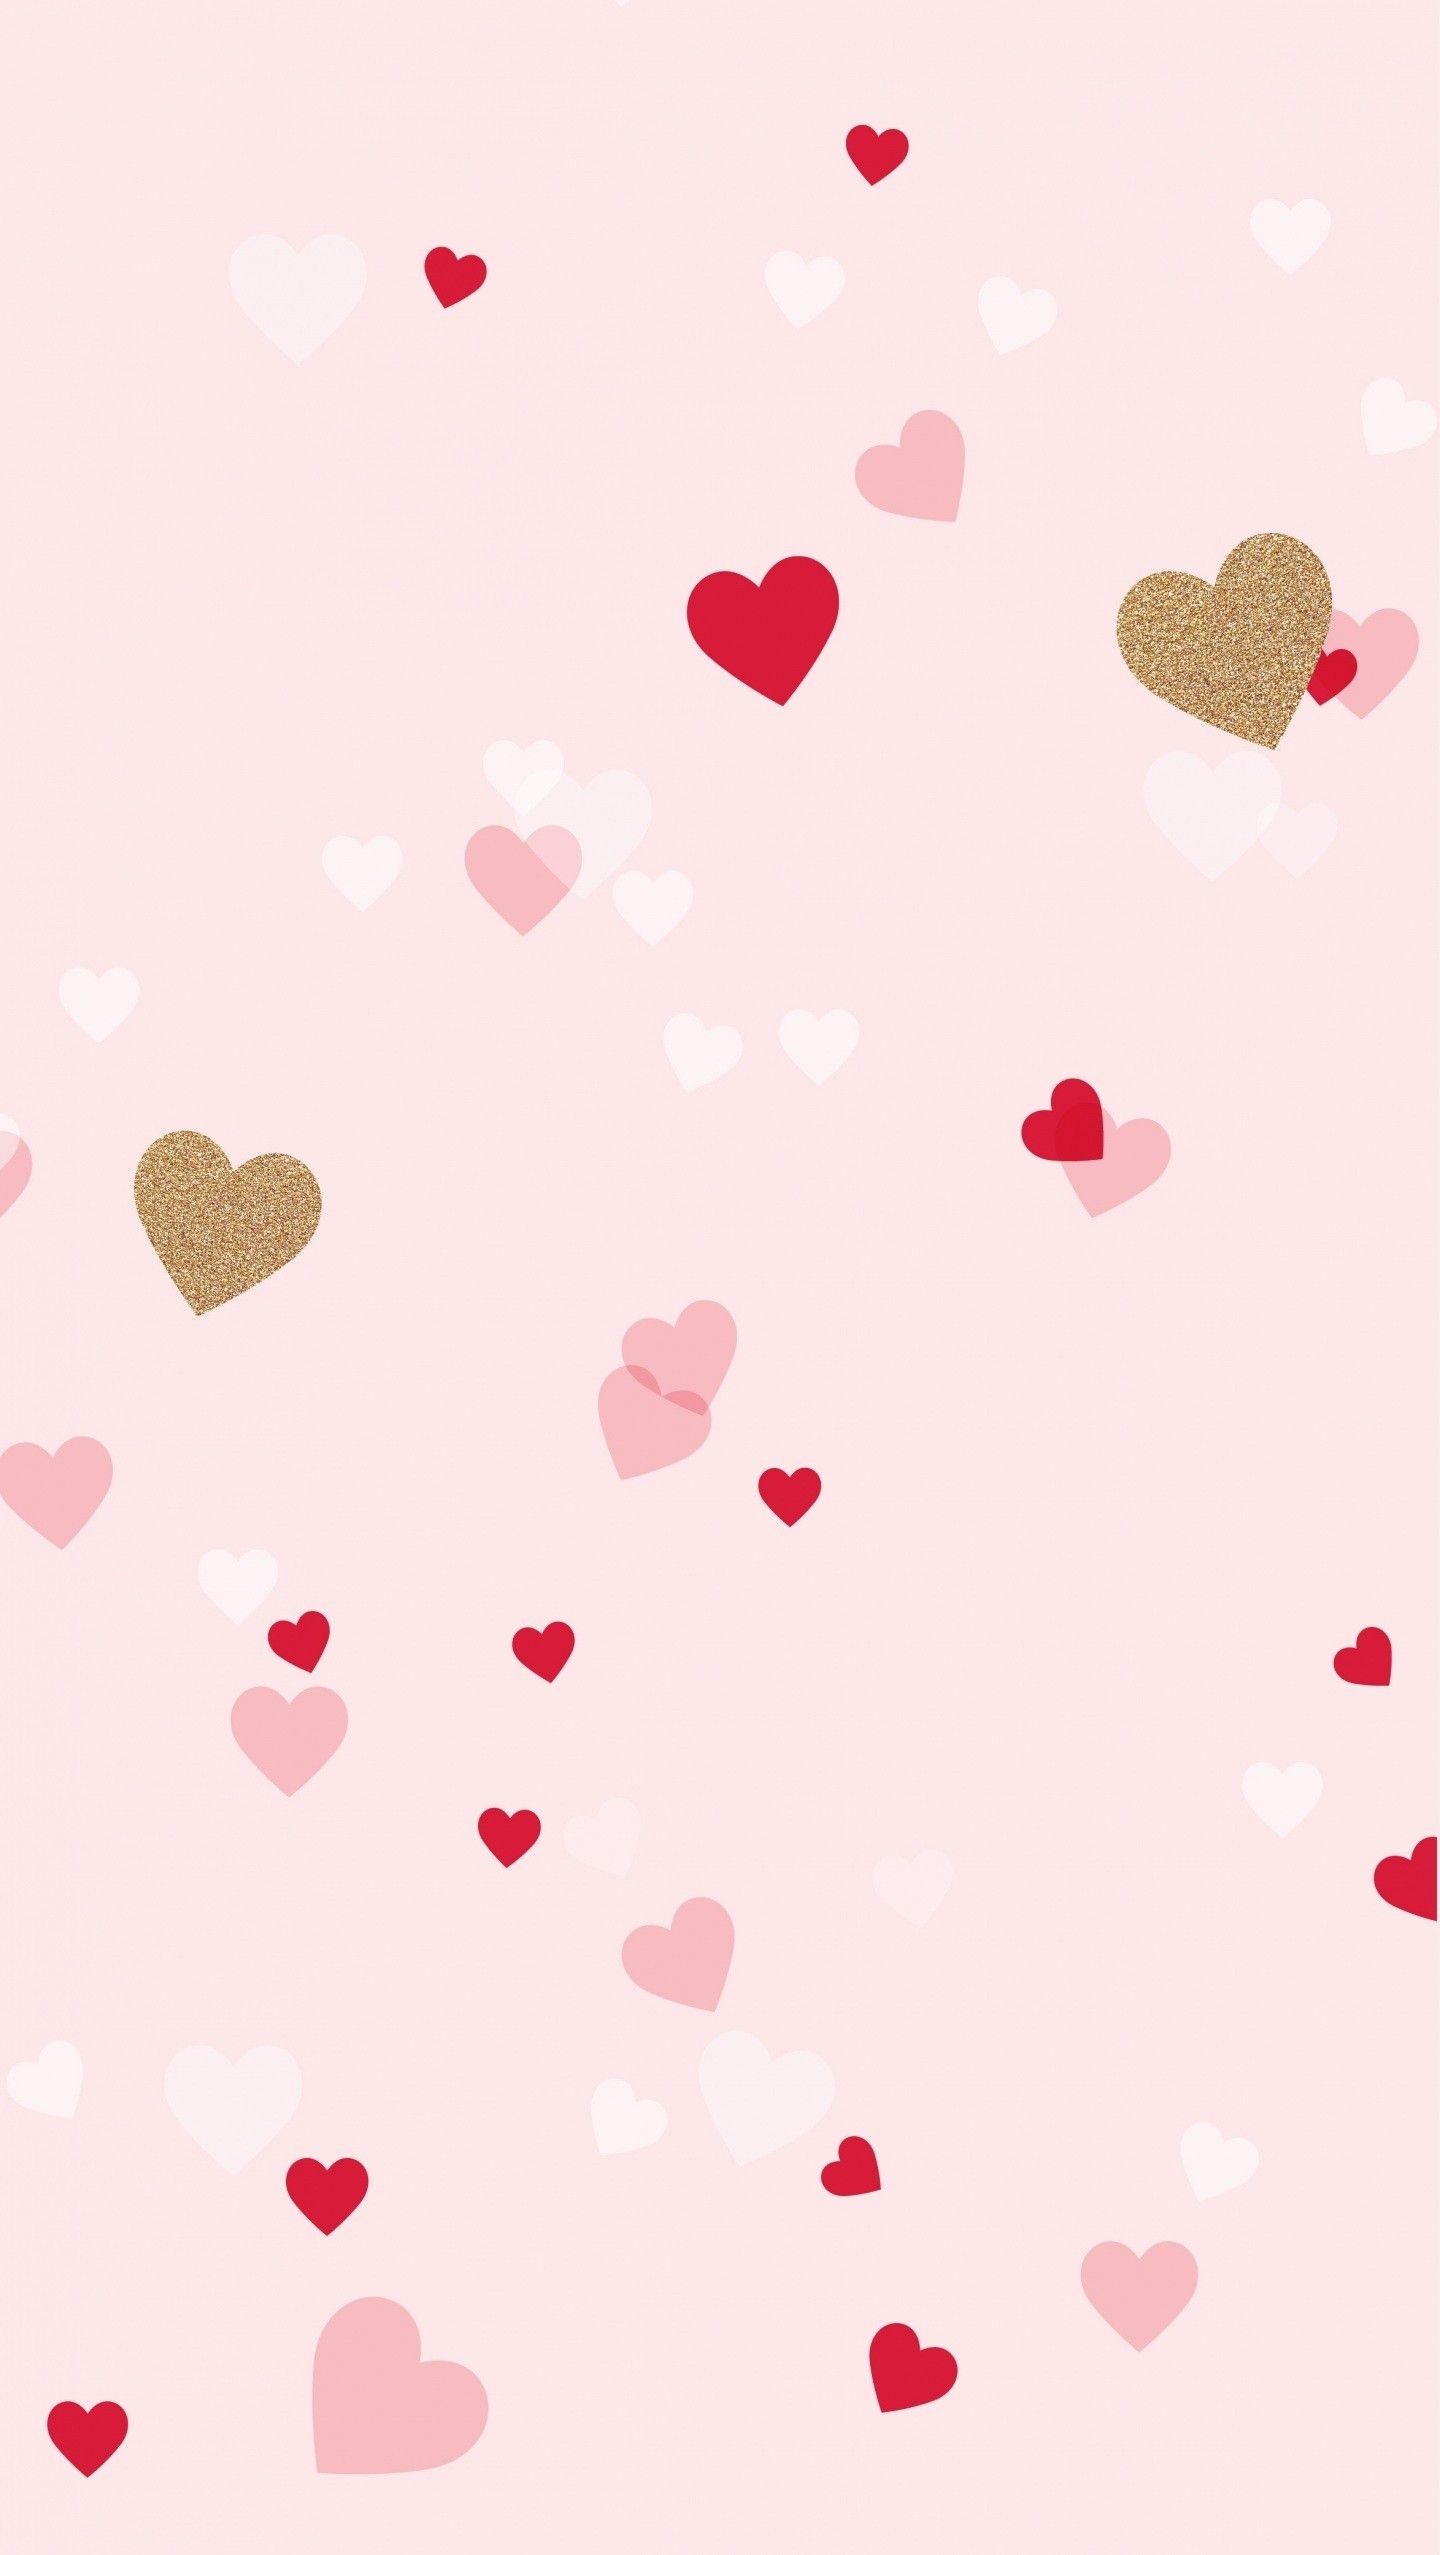 1440x2555 Wallpaper iphone cute hd - Cute Hearts Iphone Background Image